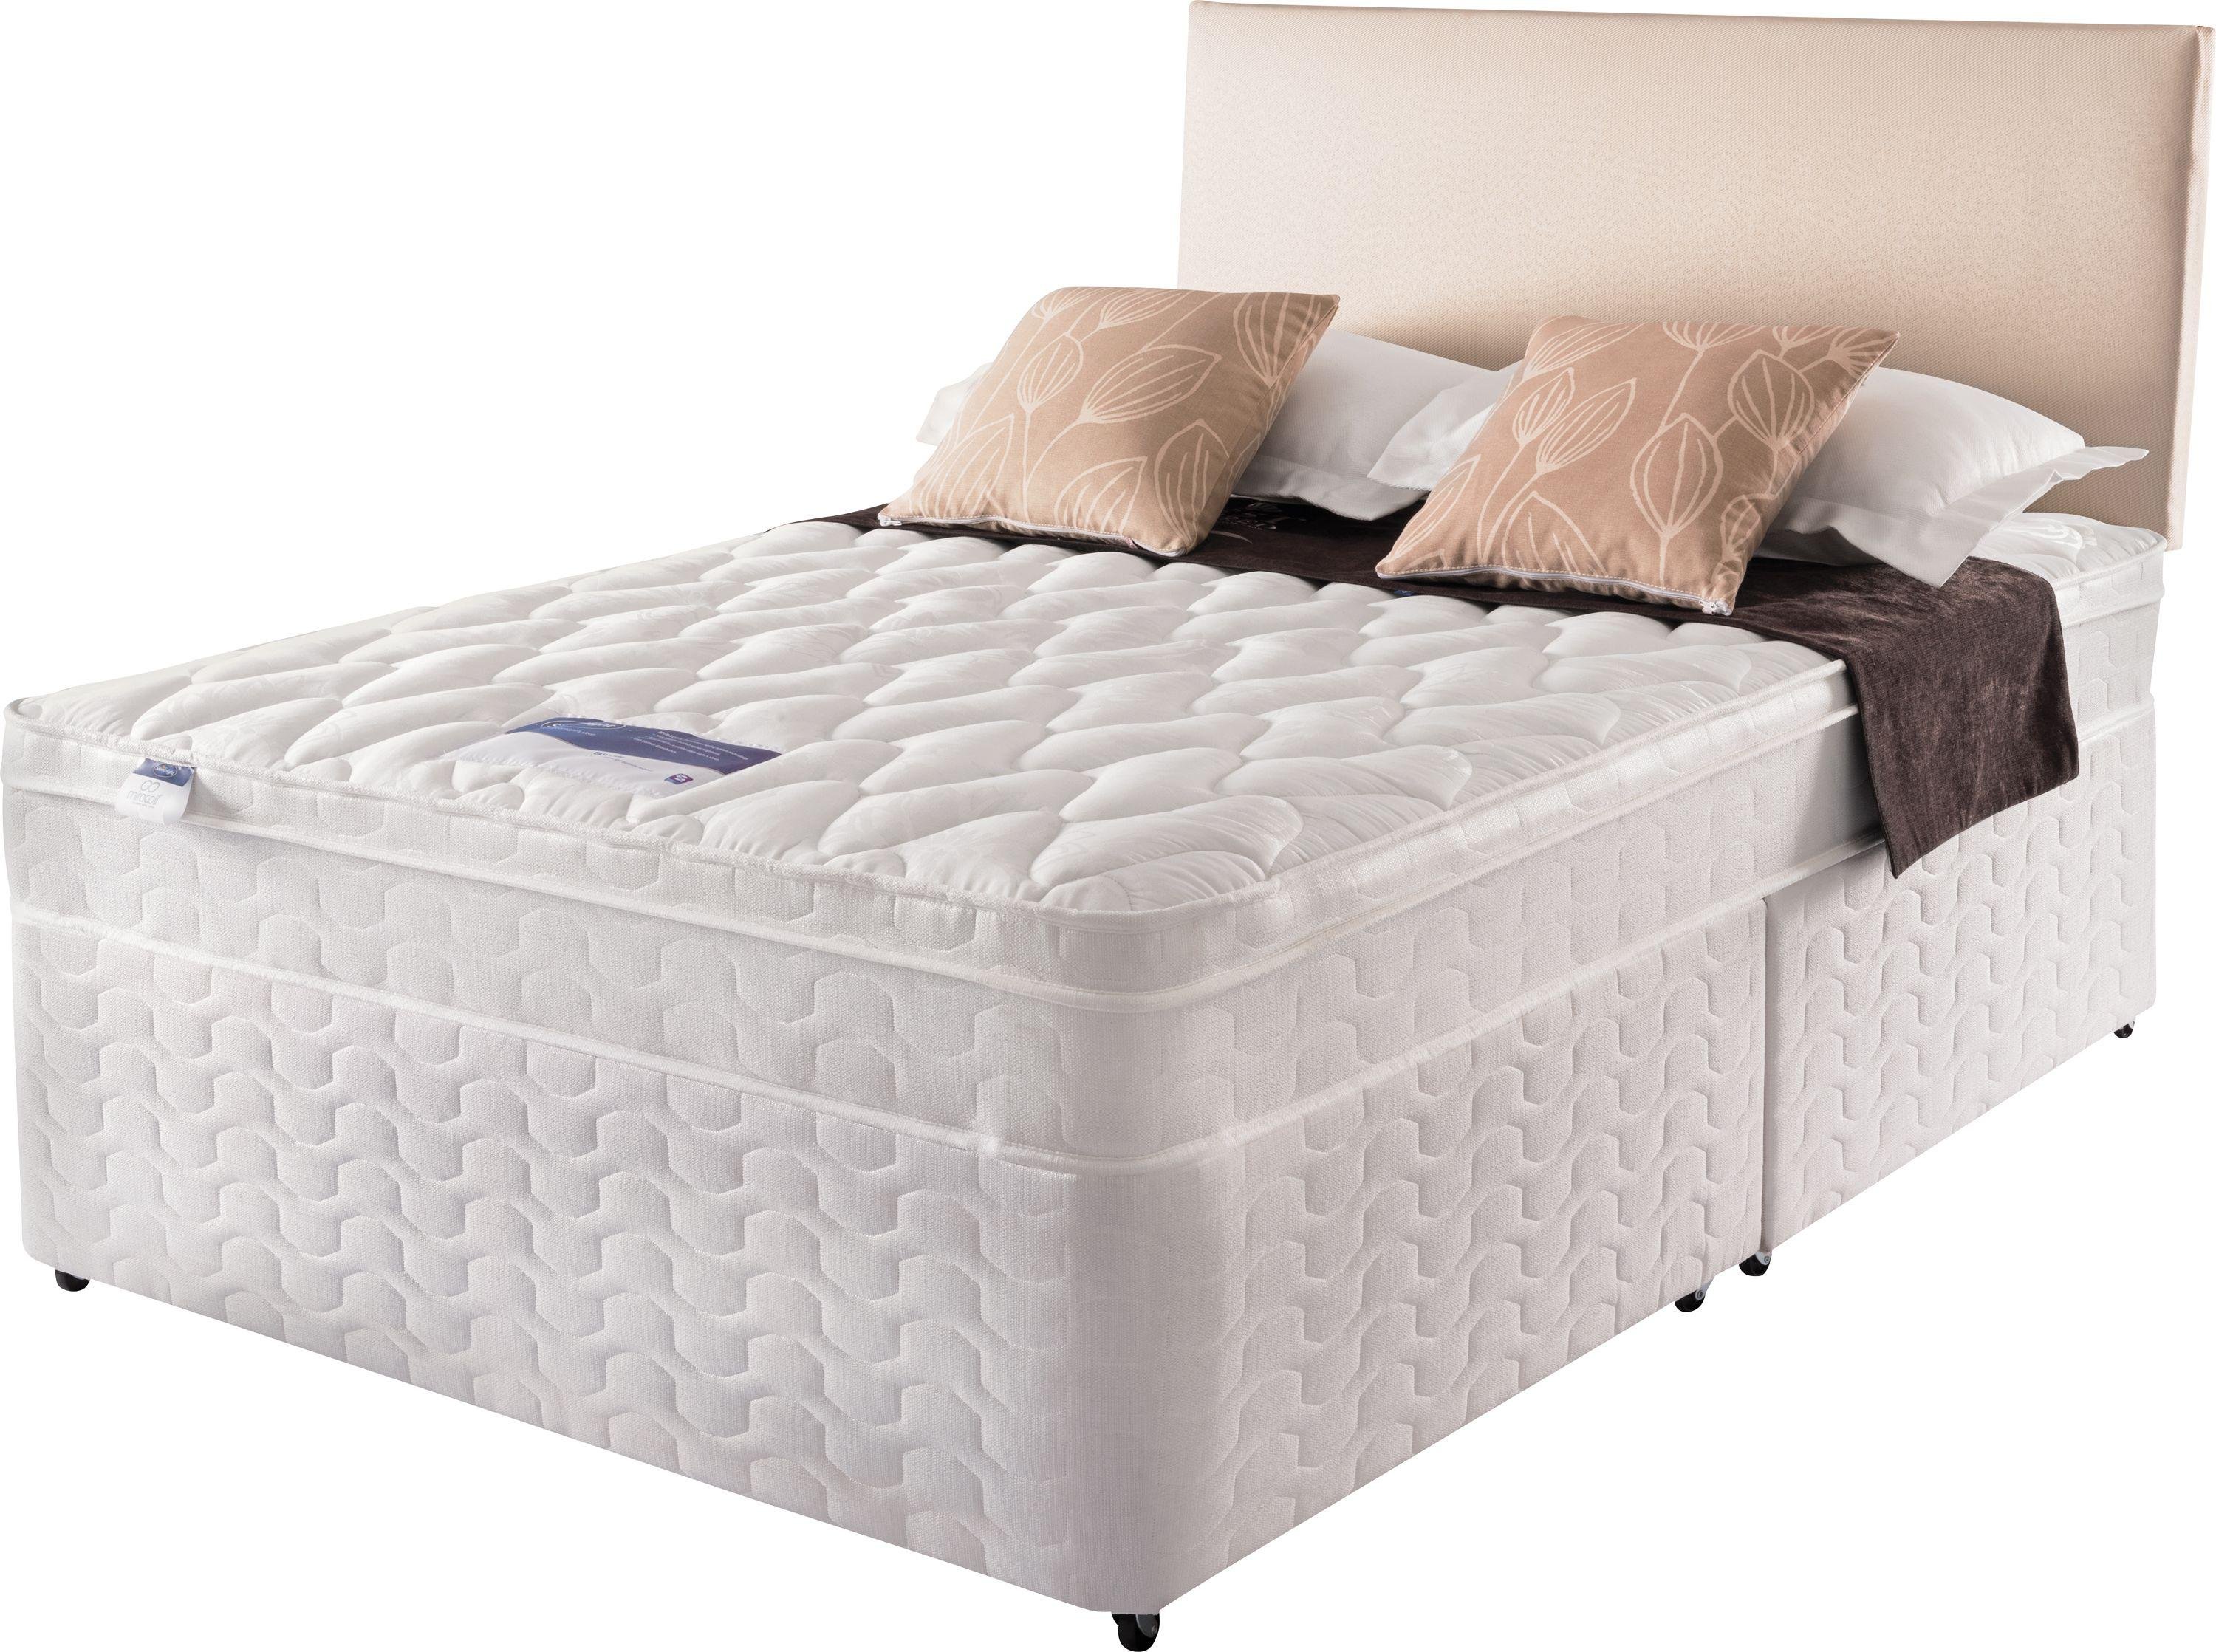 silentnight auckland luxury double mattress review